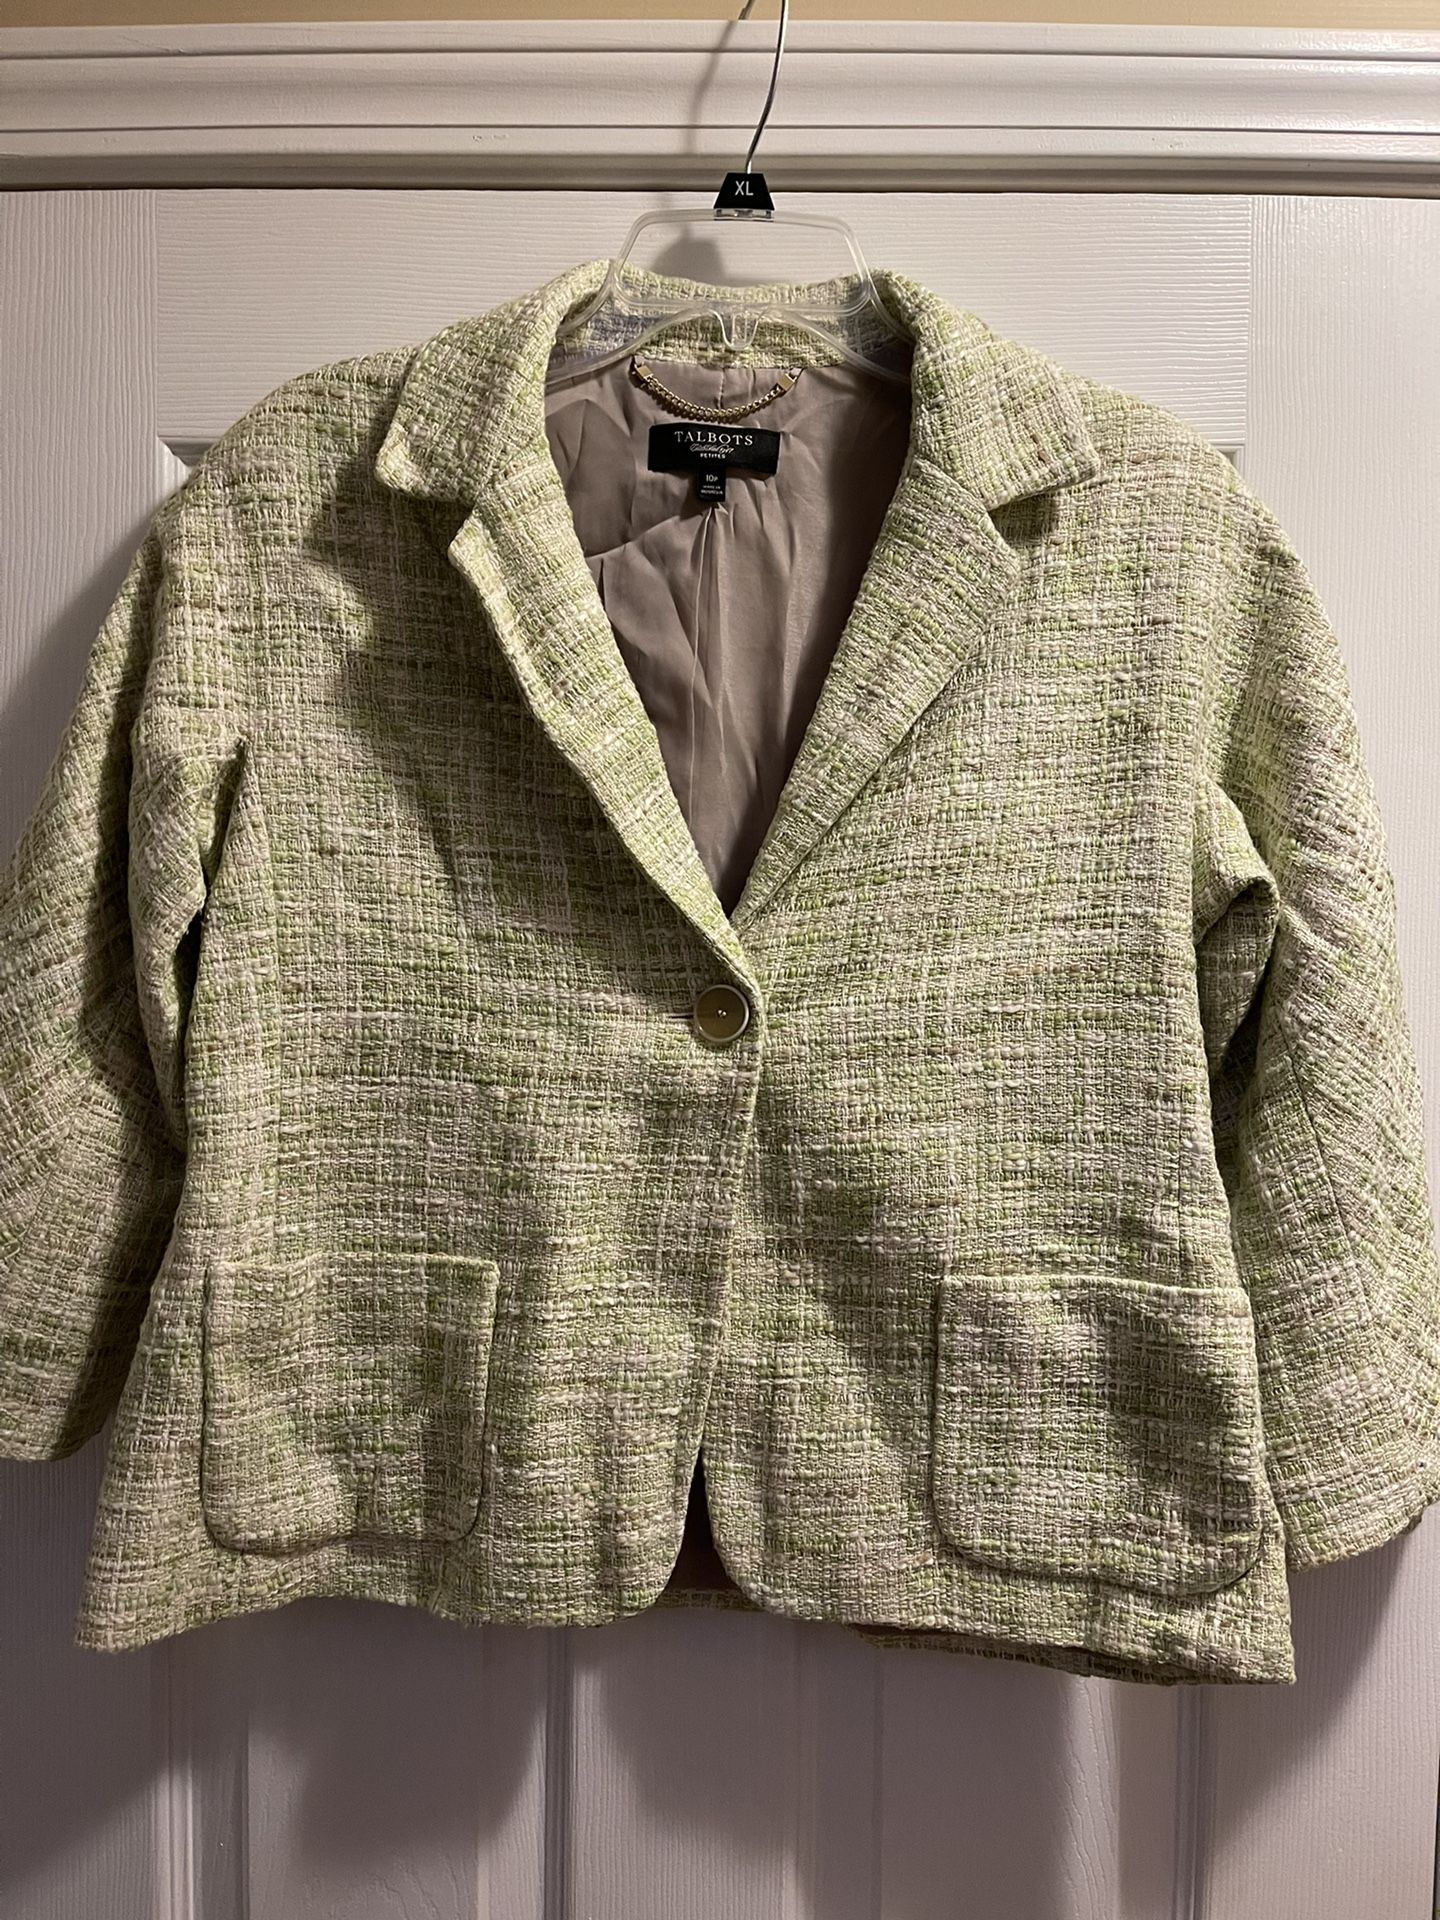 Talbots Womens Lined Blazer Jacket Celery Tweed Wool Blend W/ Pockets SIZE 10p